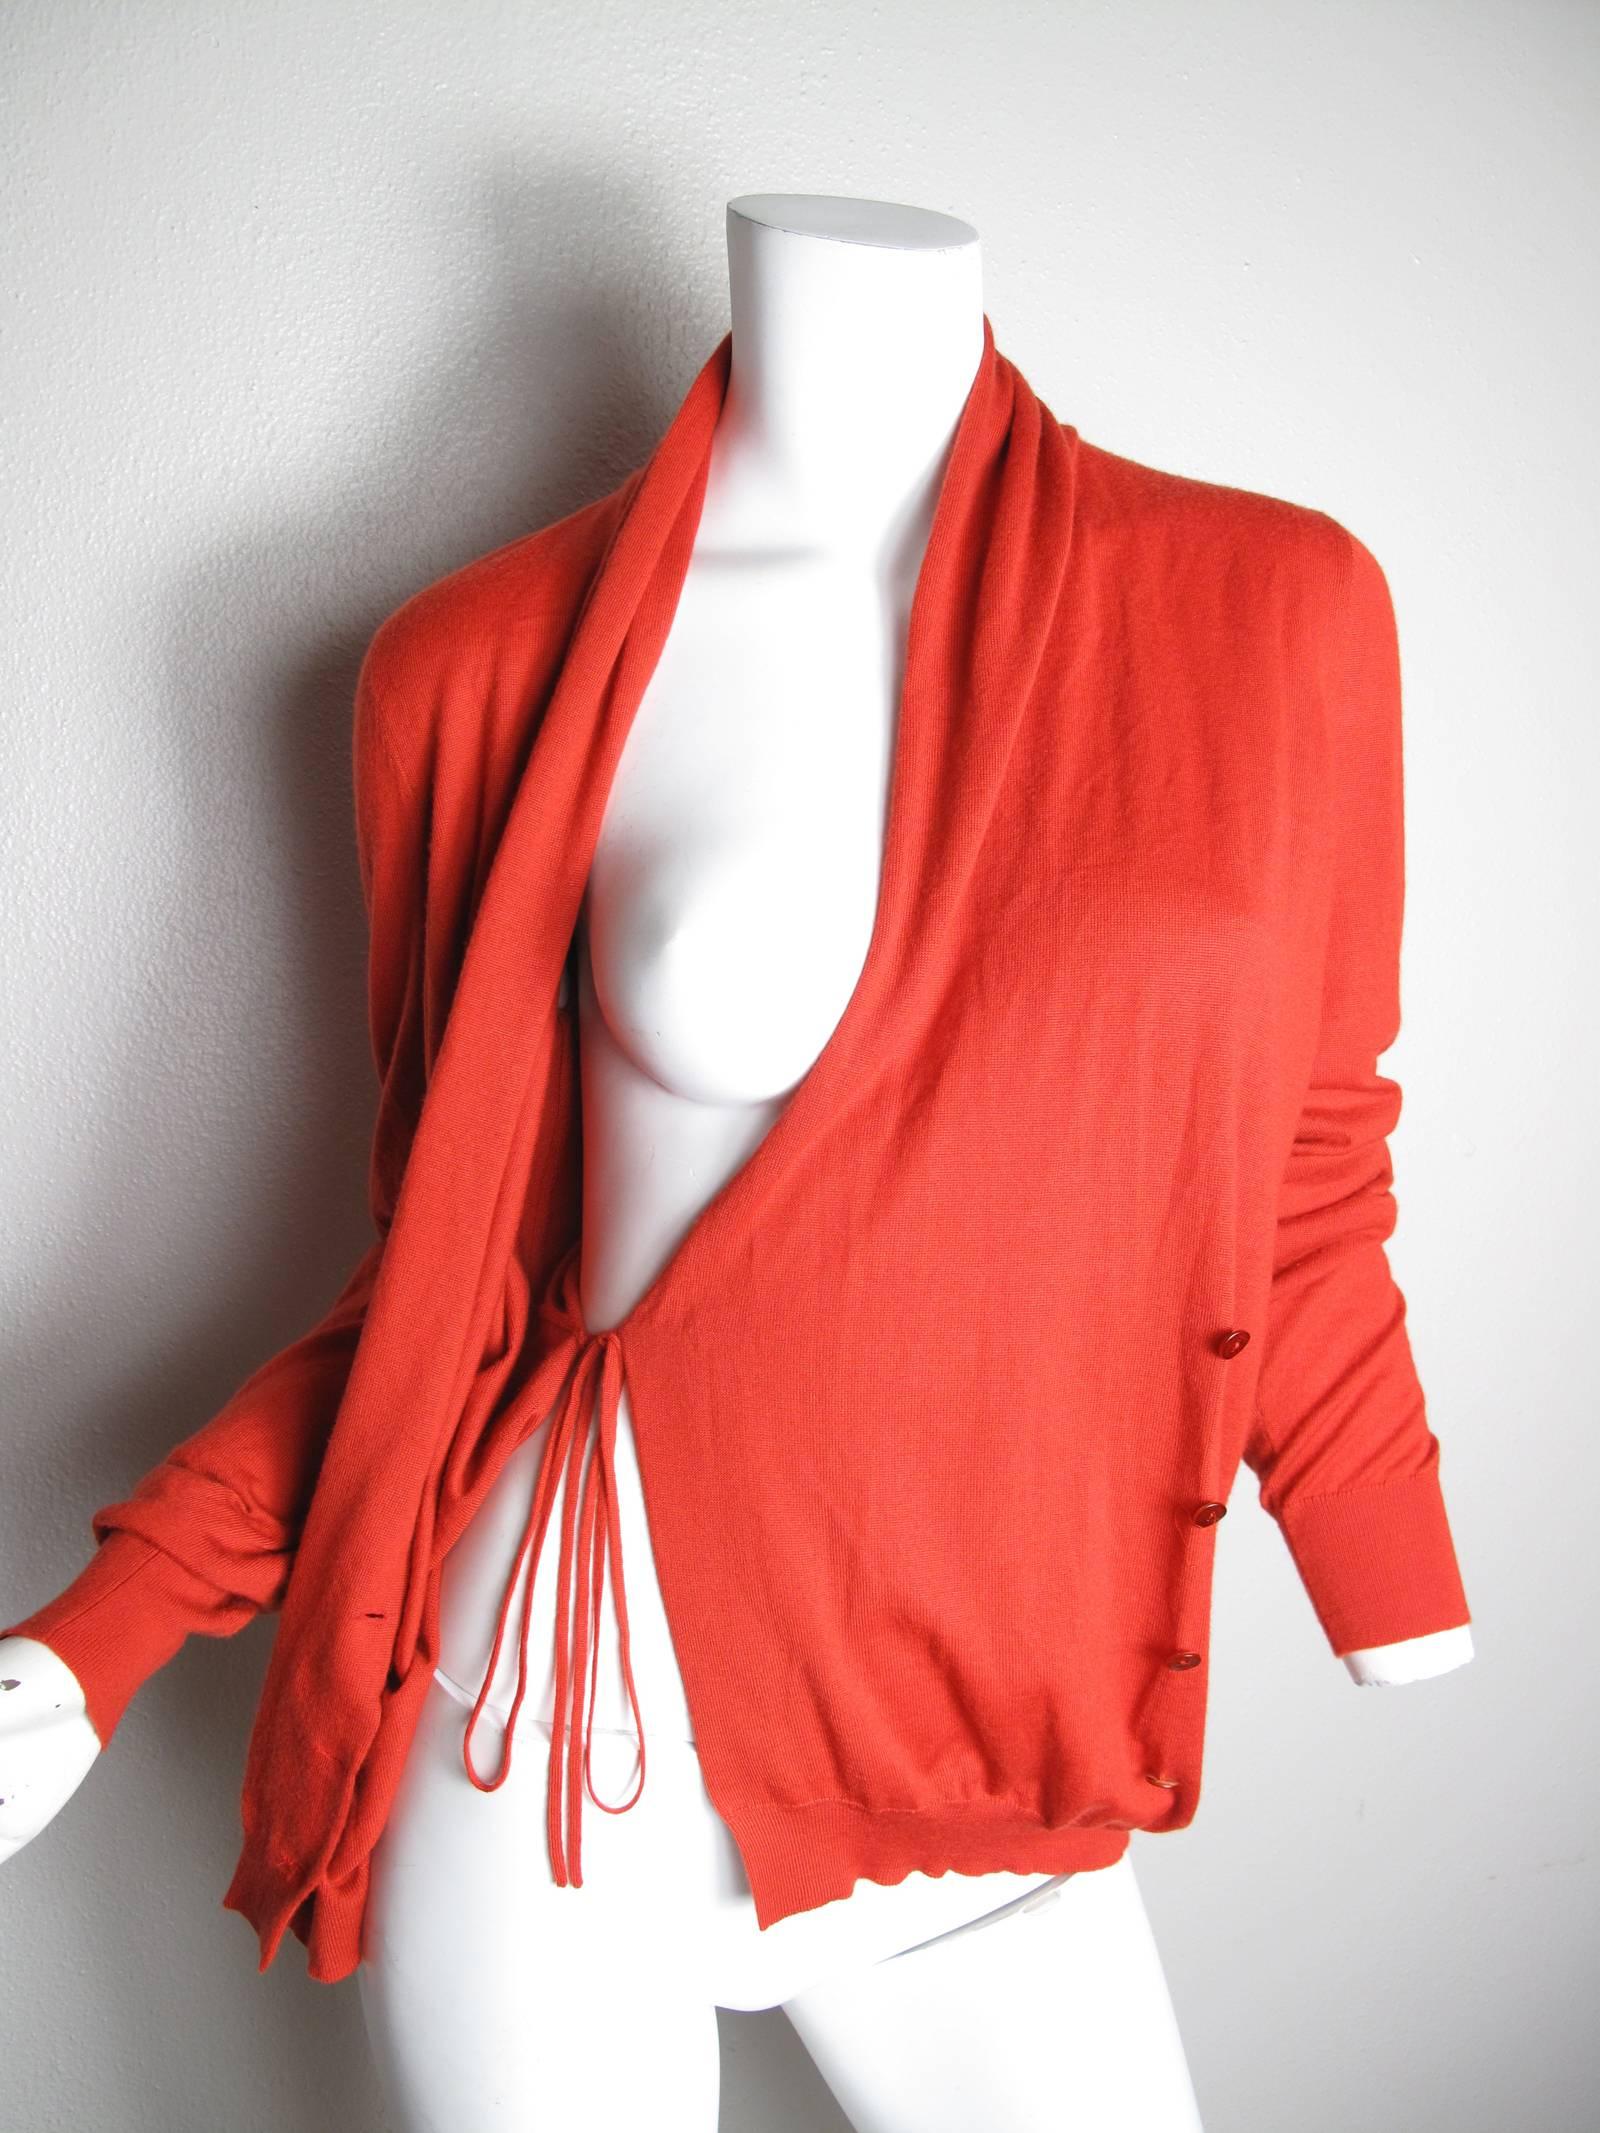 Alexander McQueen orange cashmere wrap cardigan.  Condition: Excellent. Size M.